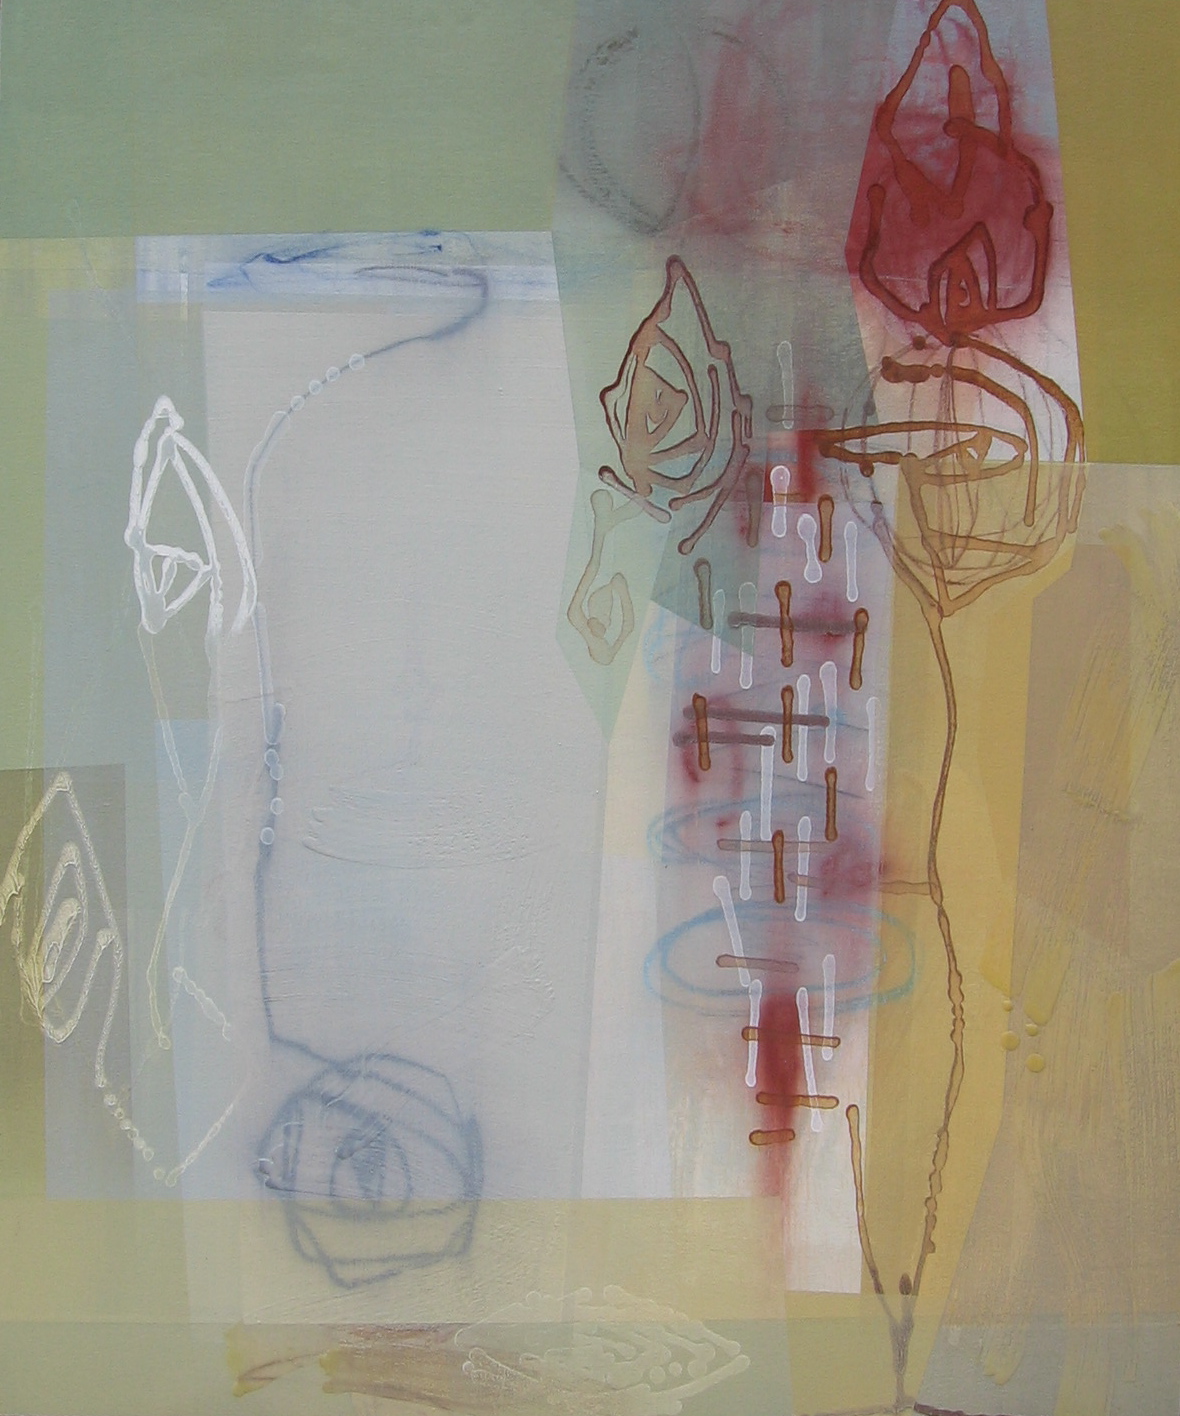 Tintern Abbey (Orchard Tufts)  mixed media on canvas  48 x 40  $5800  2014